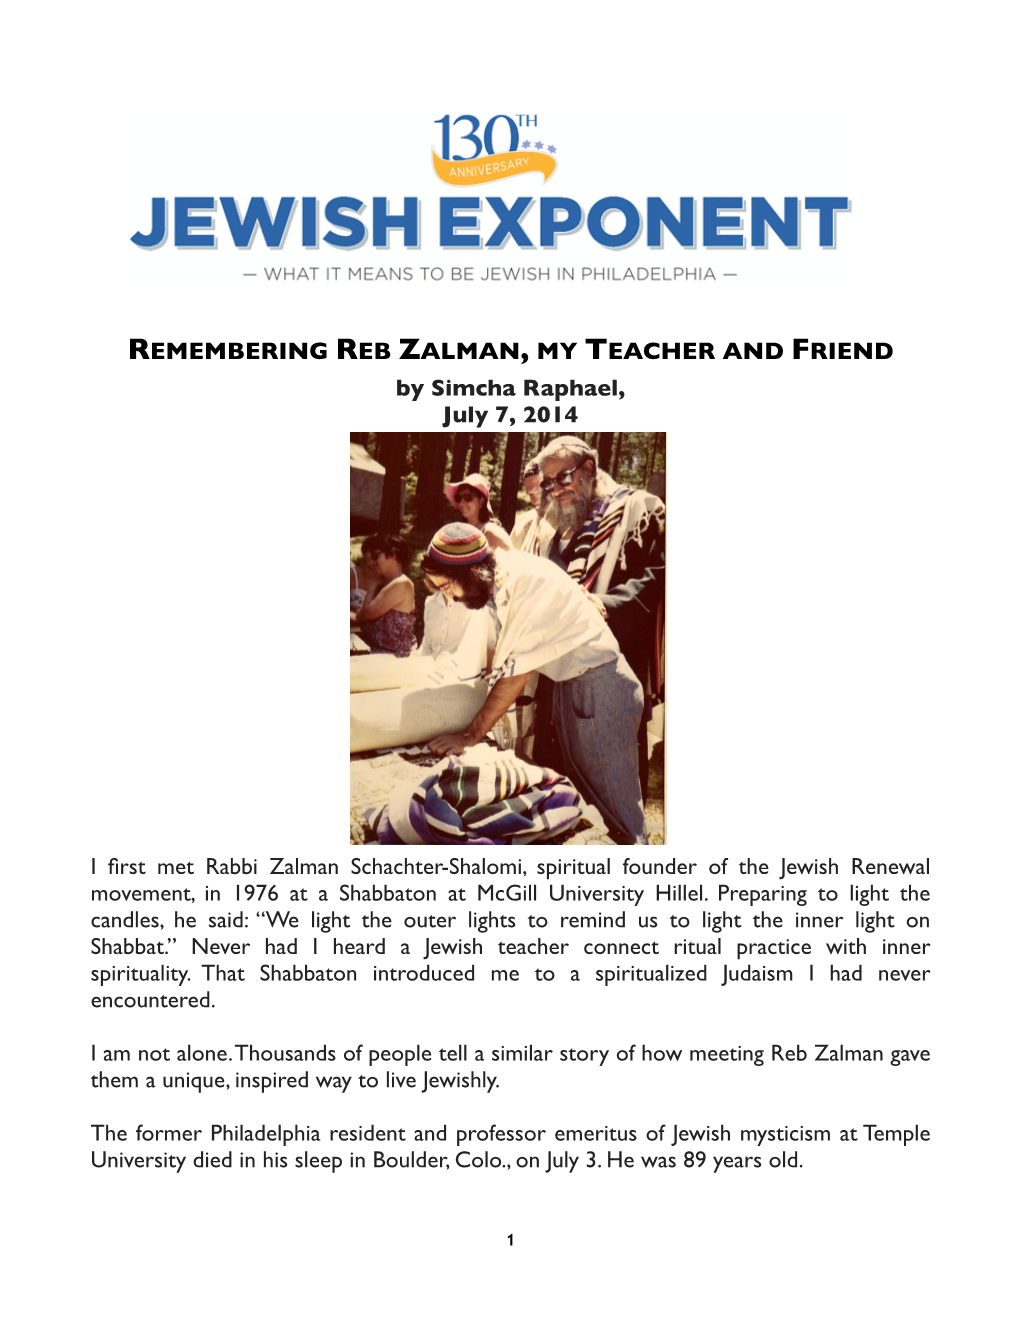 3) Jewish Exponent, 7/7/14